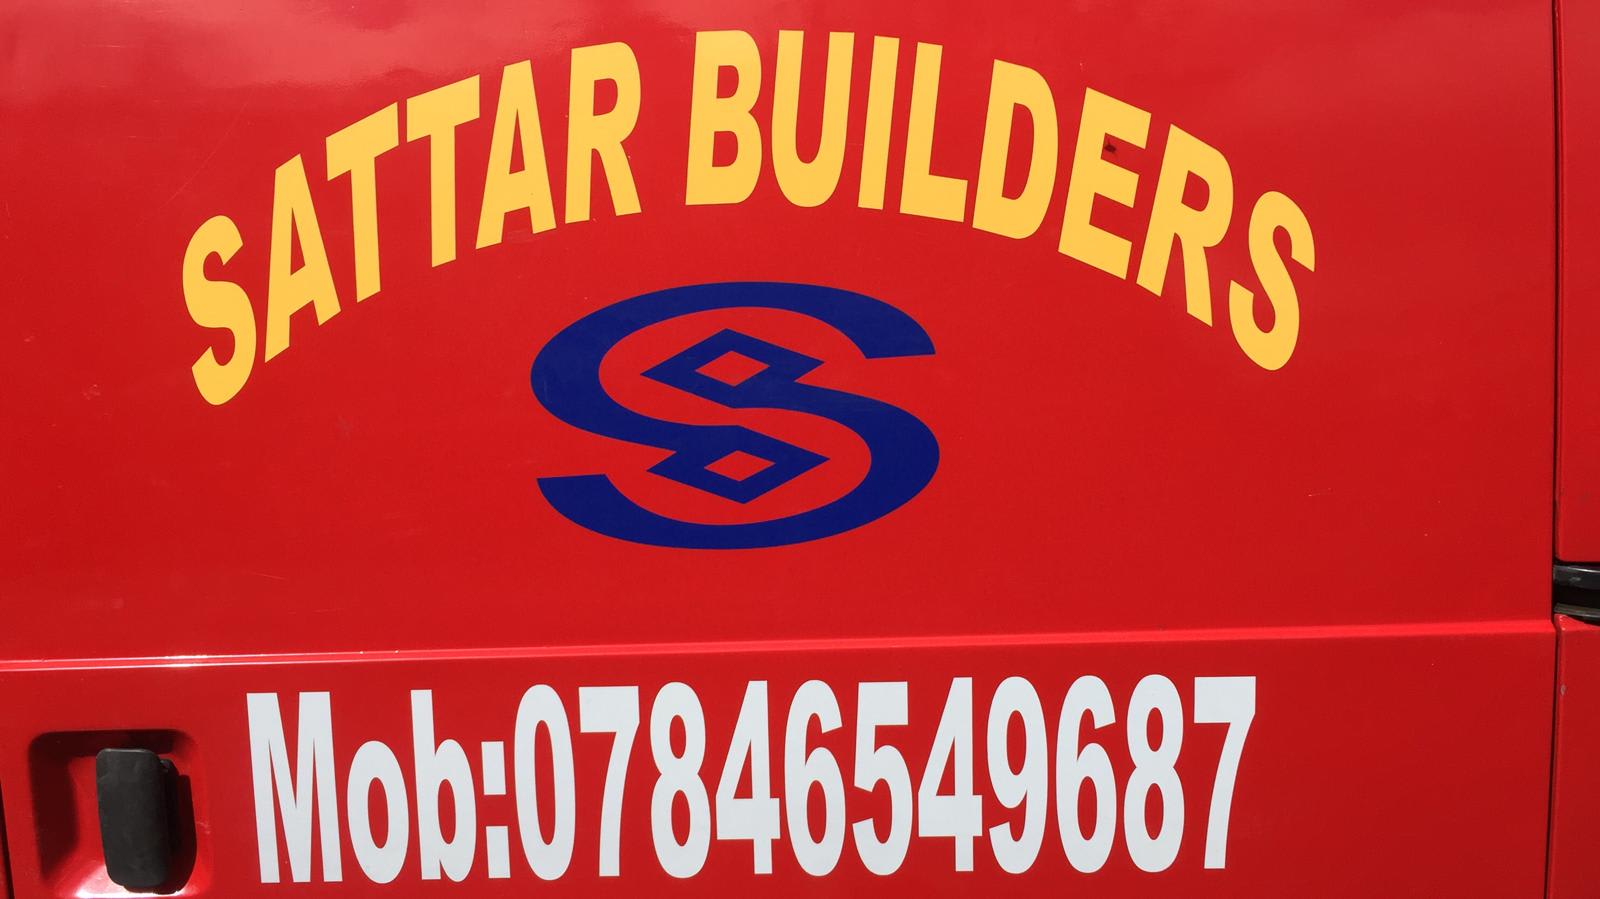 Sattar Builders